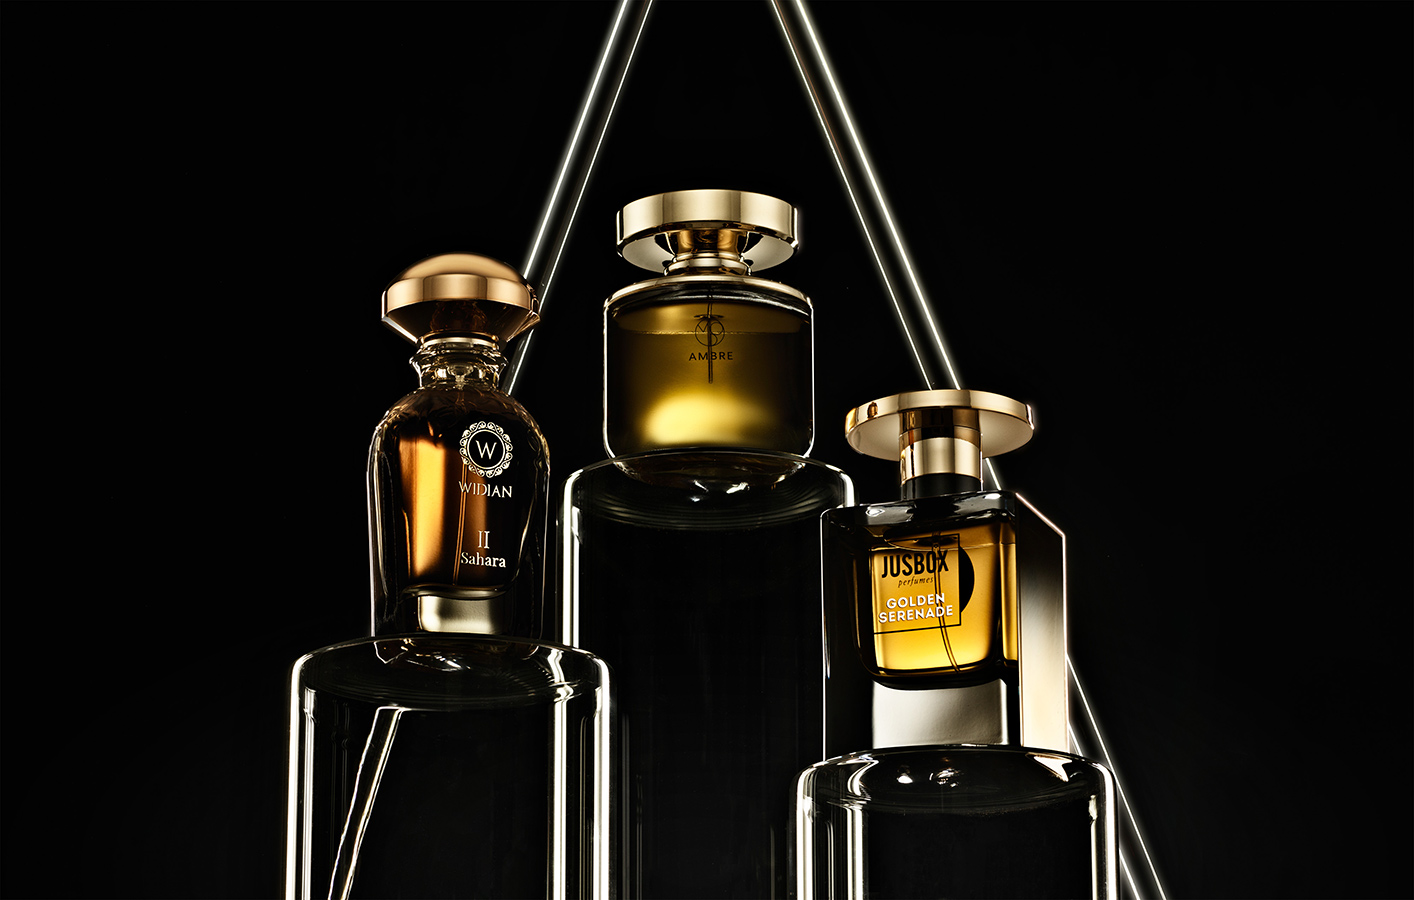 widian parfums, mona di orio, jusbox fragrance